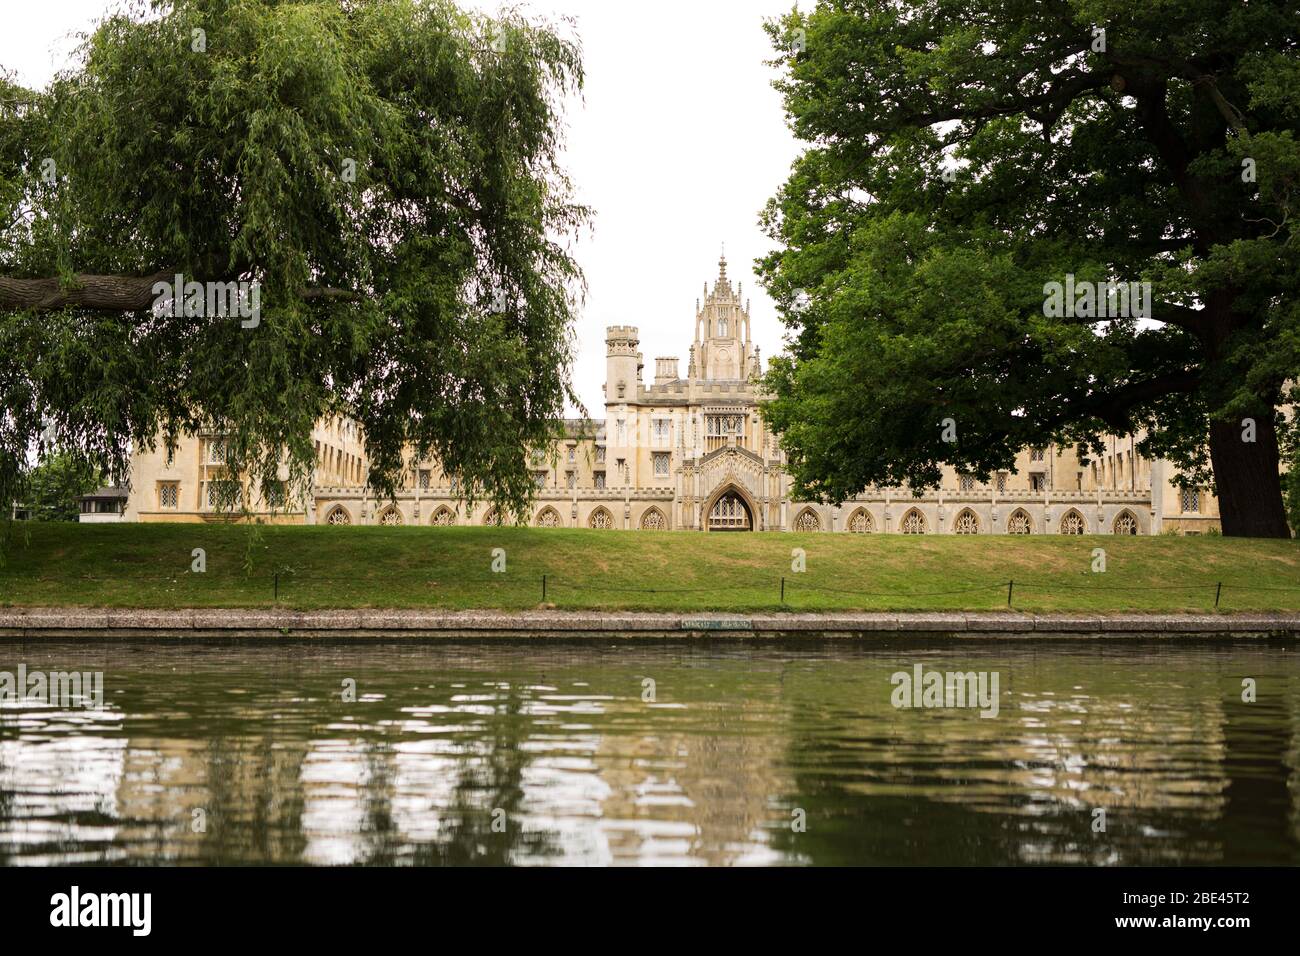 St John's College am Ufer des Flusses Cam in Cambridge, England, Großbritannien. Stockfoto